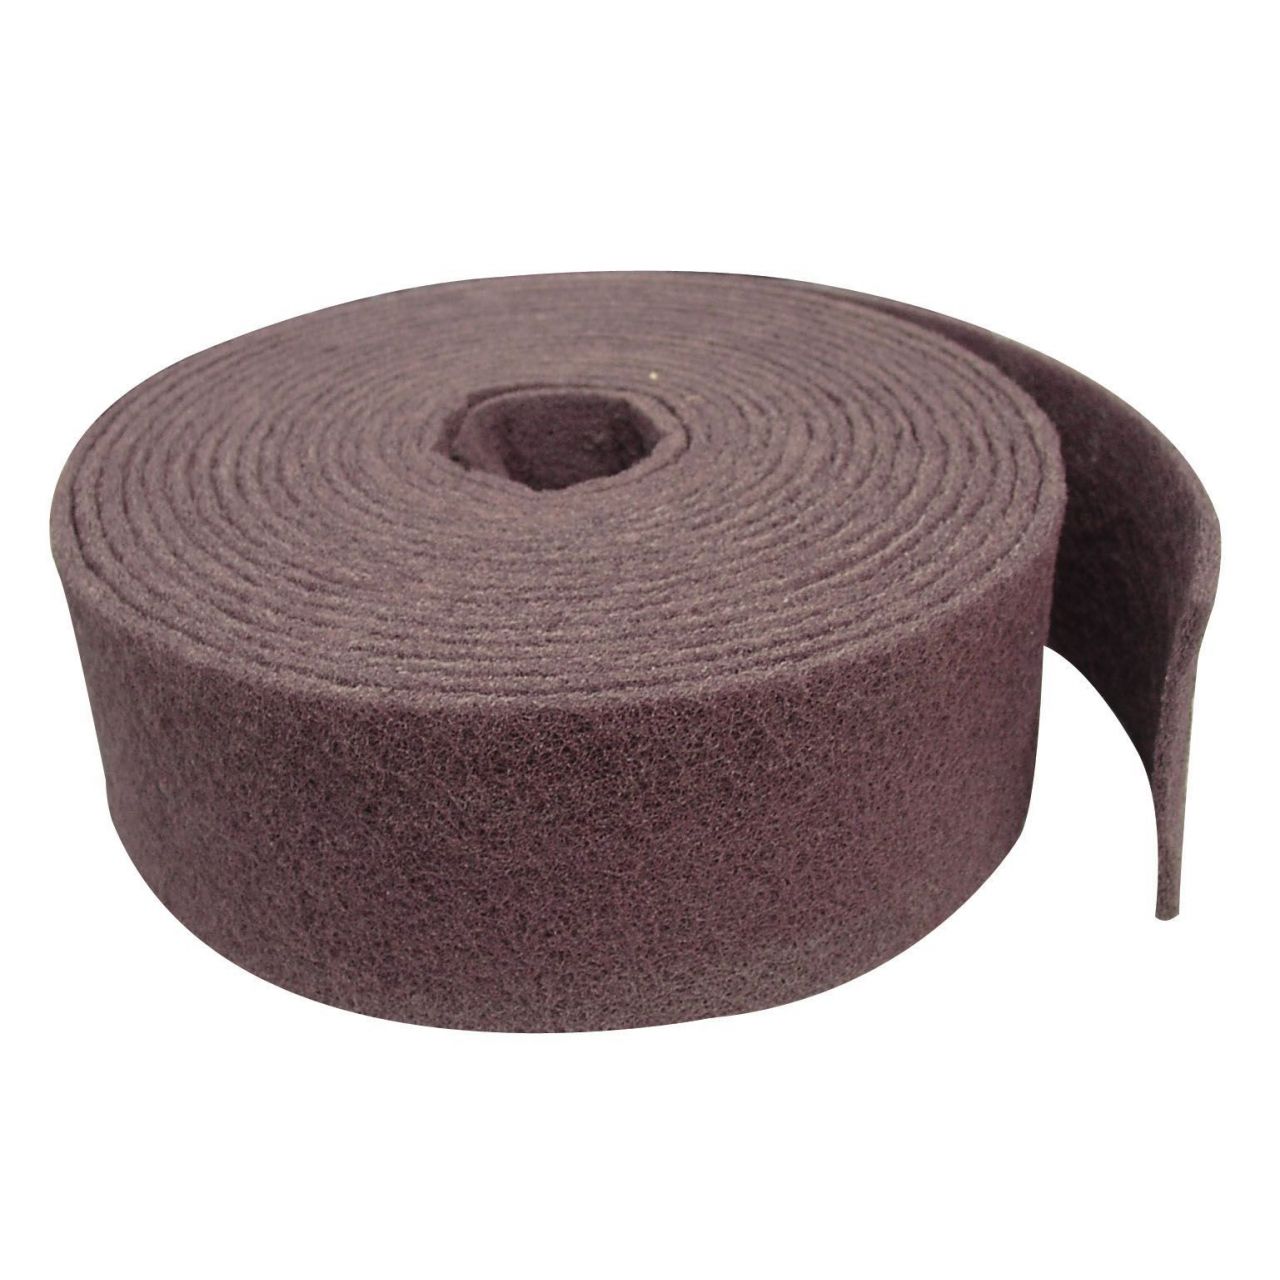 Rollos fibra abrasiva sin tejer calidad profesional (Ancho 100 mm; Largo 10.000 mm; Grano VF-280/320)